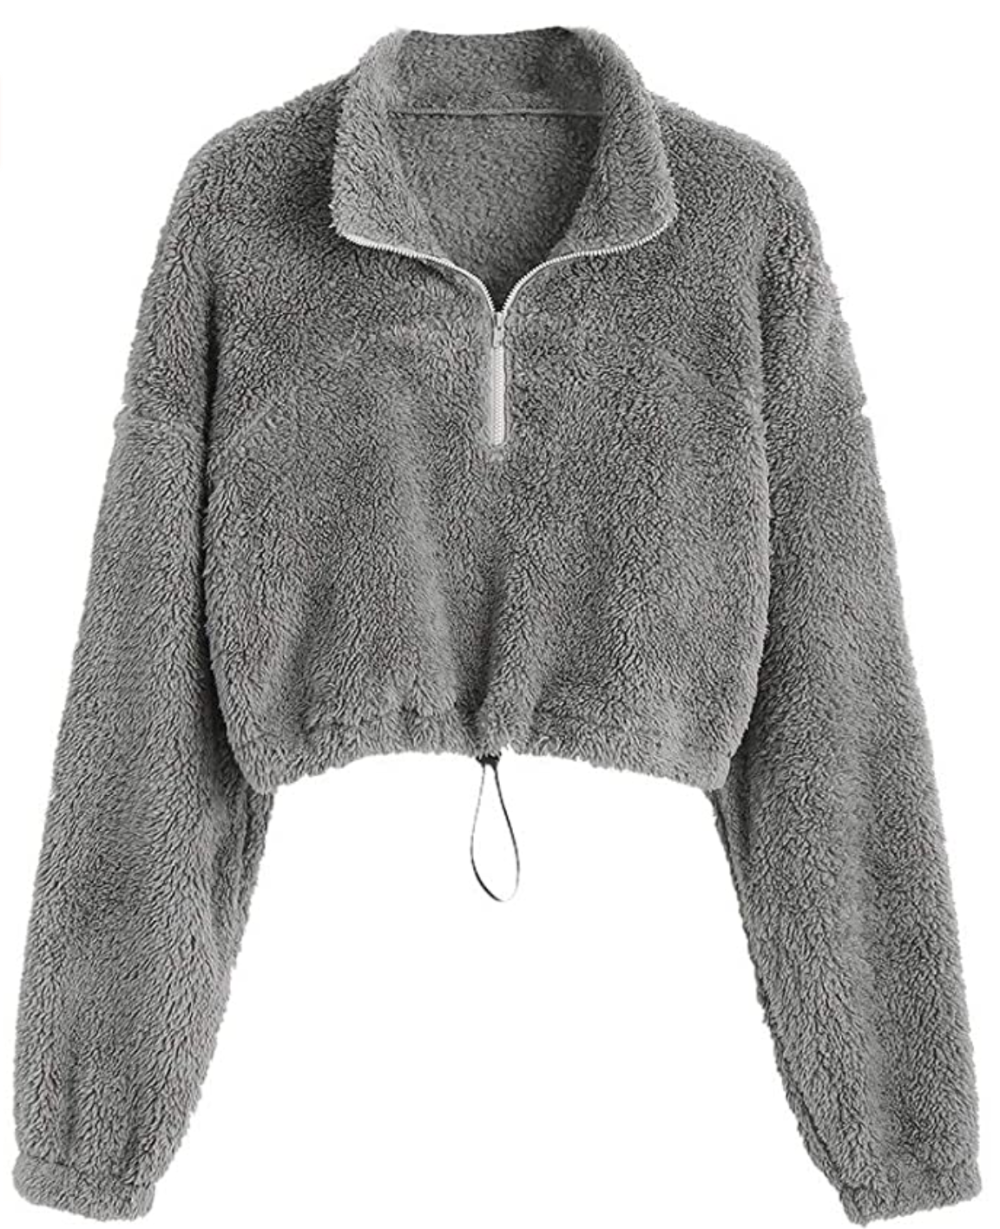 ZAFUL Women's Faux Fur Pullover Half Zip Crop Sweatshirt